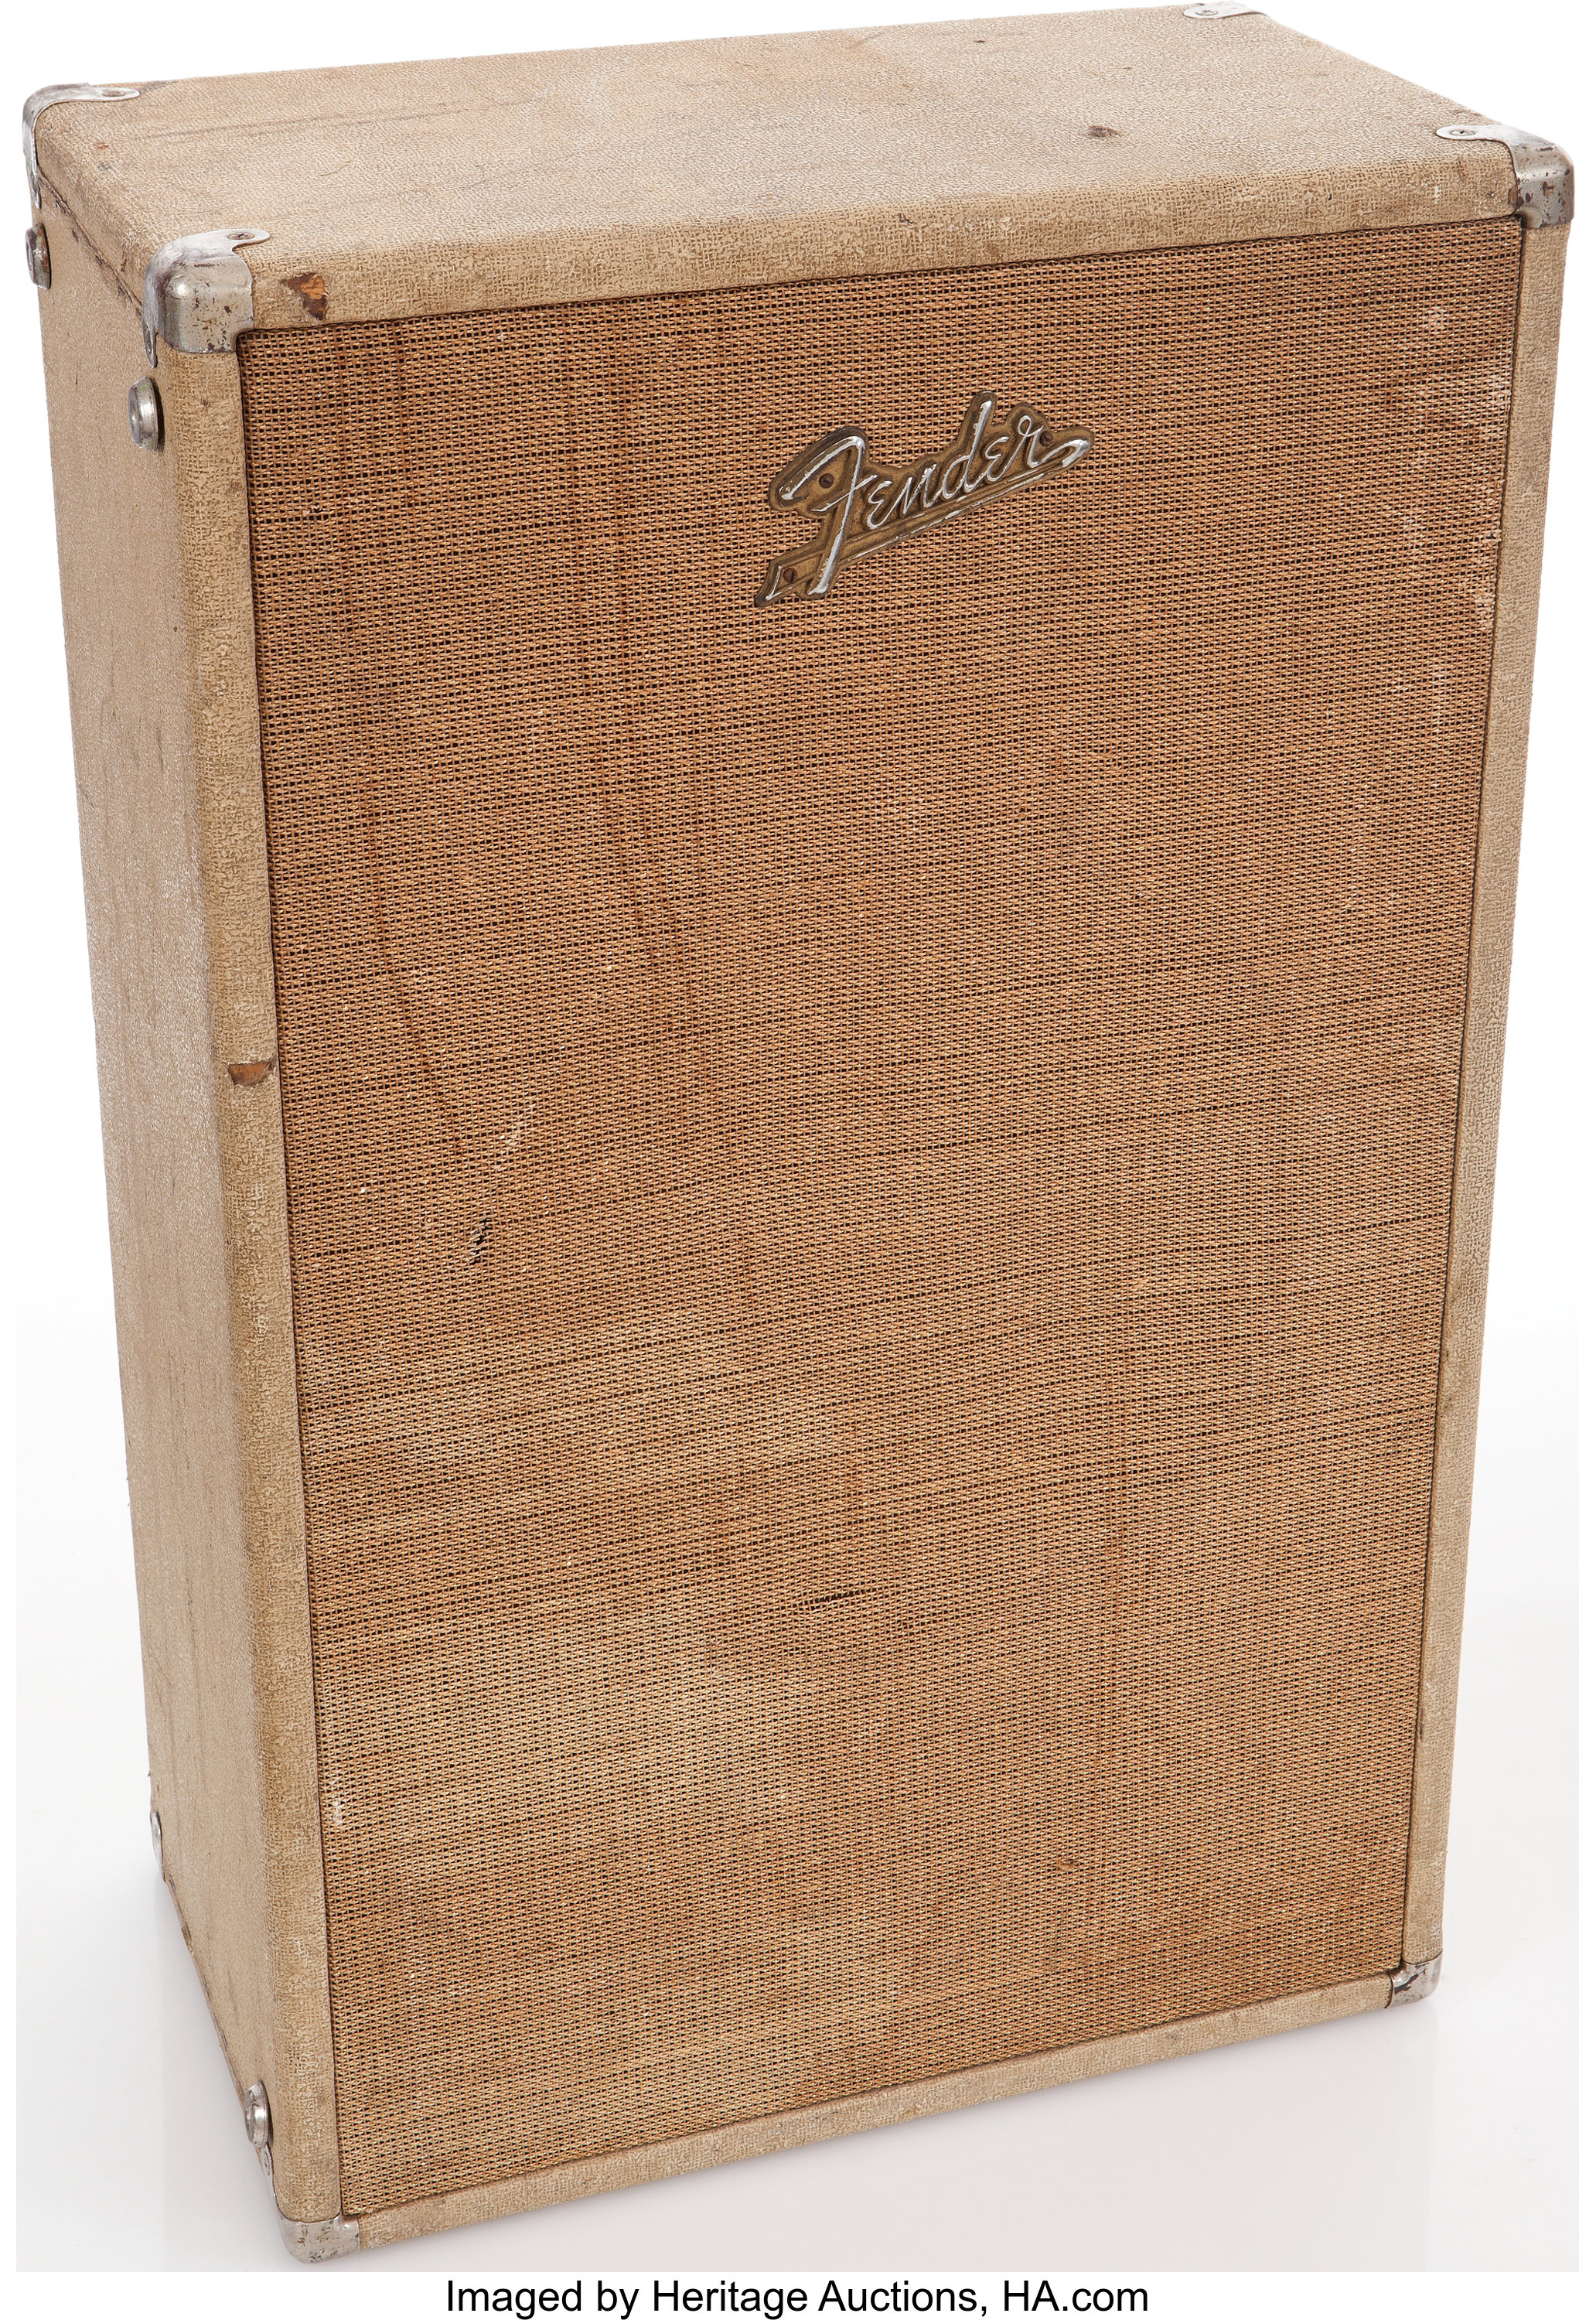 Reproduction Fender Bassman Blonde Speaker Cabinet Musical